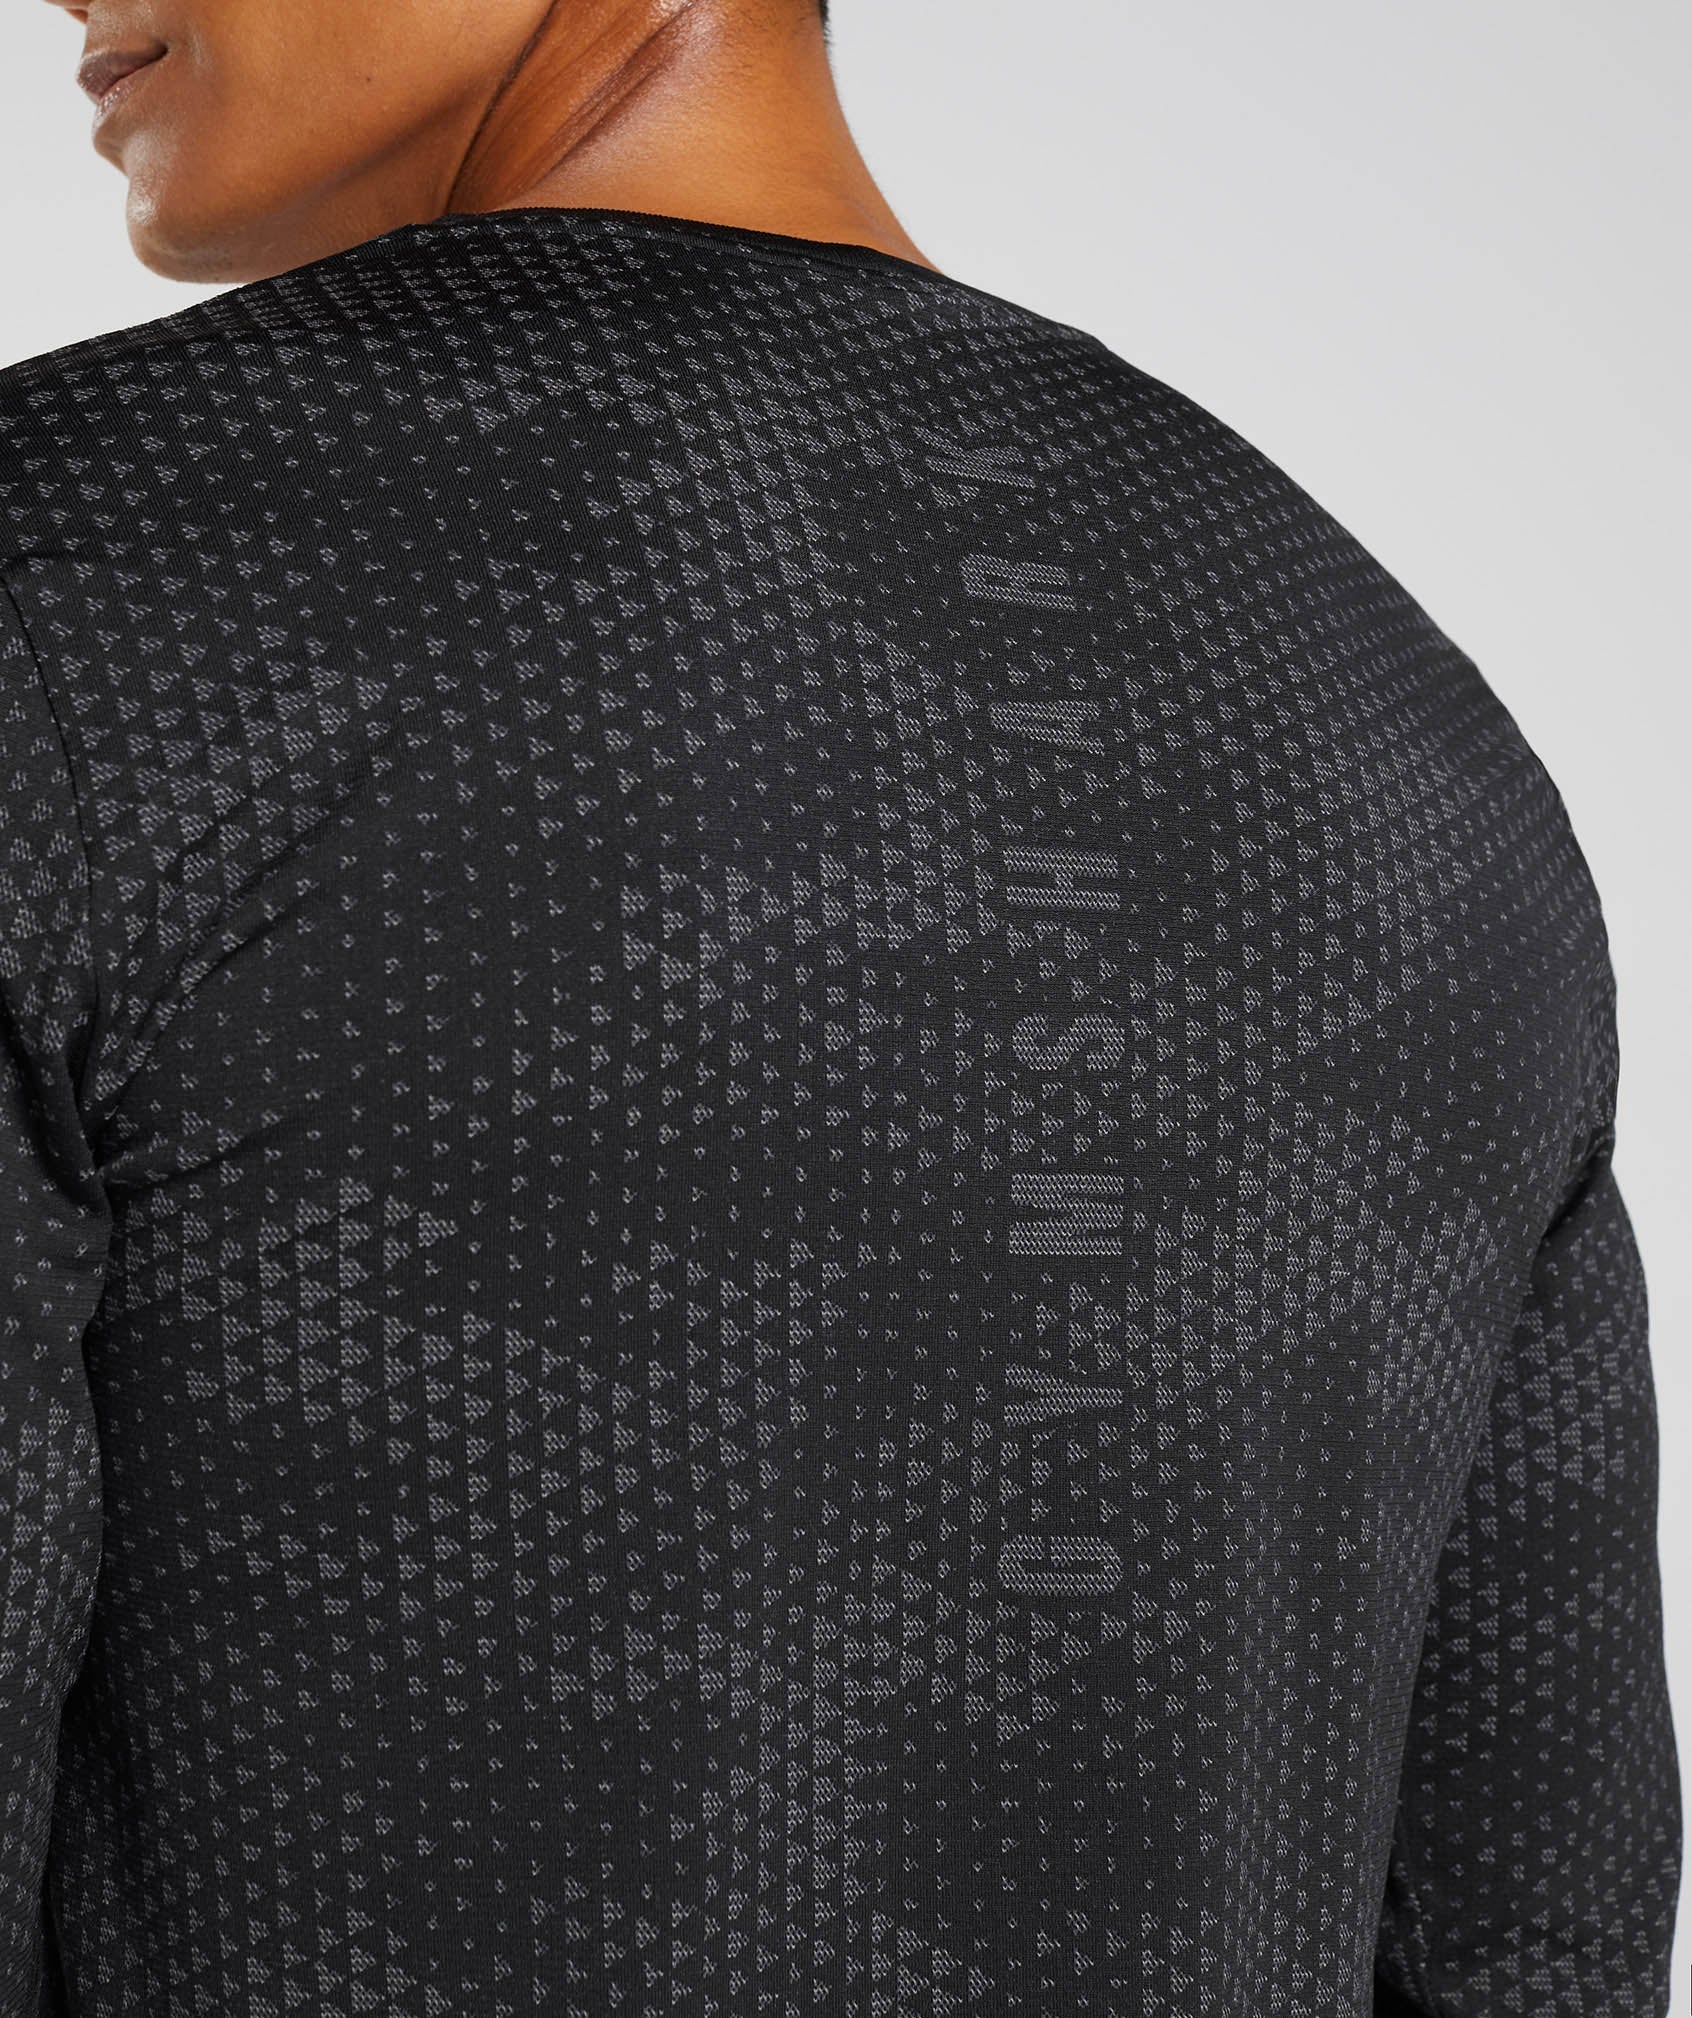 Sport Seamless Long Sleeve T-Shirt in Black/Silhouette Grey